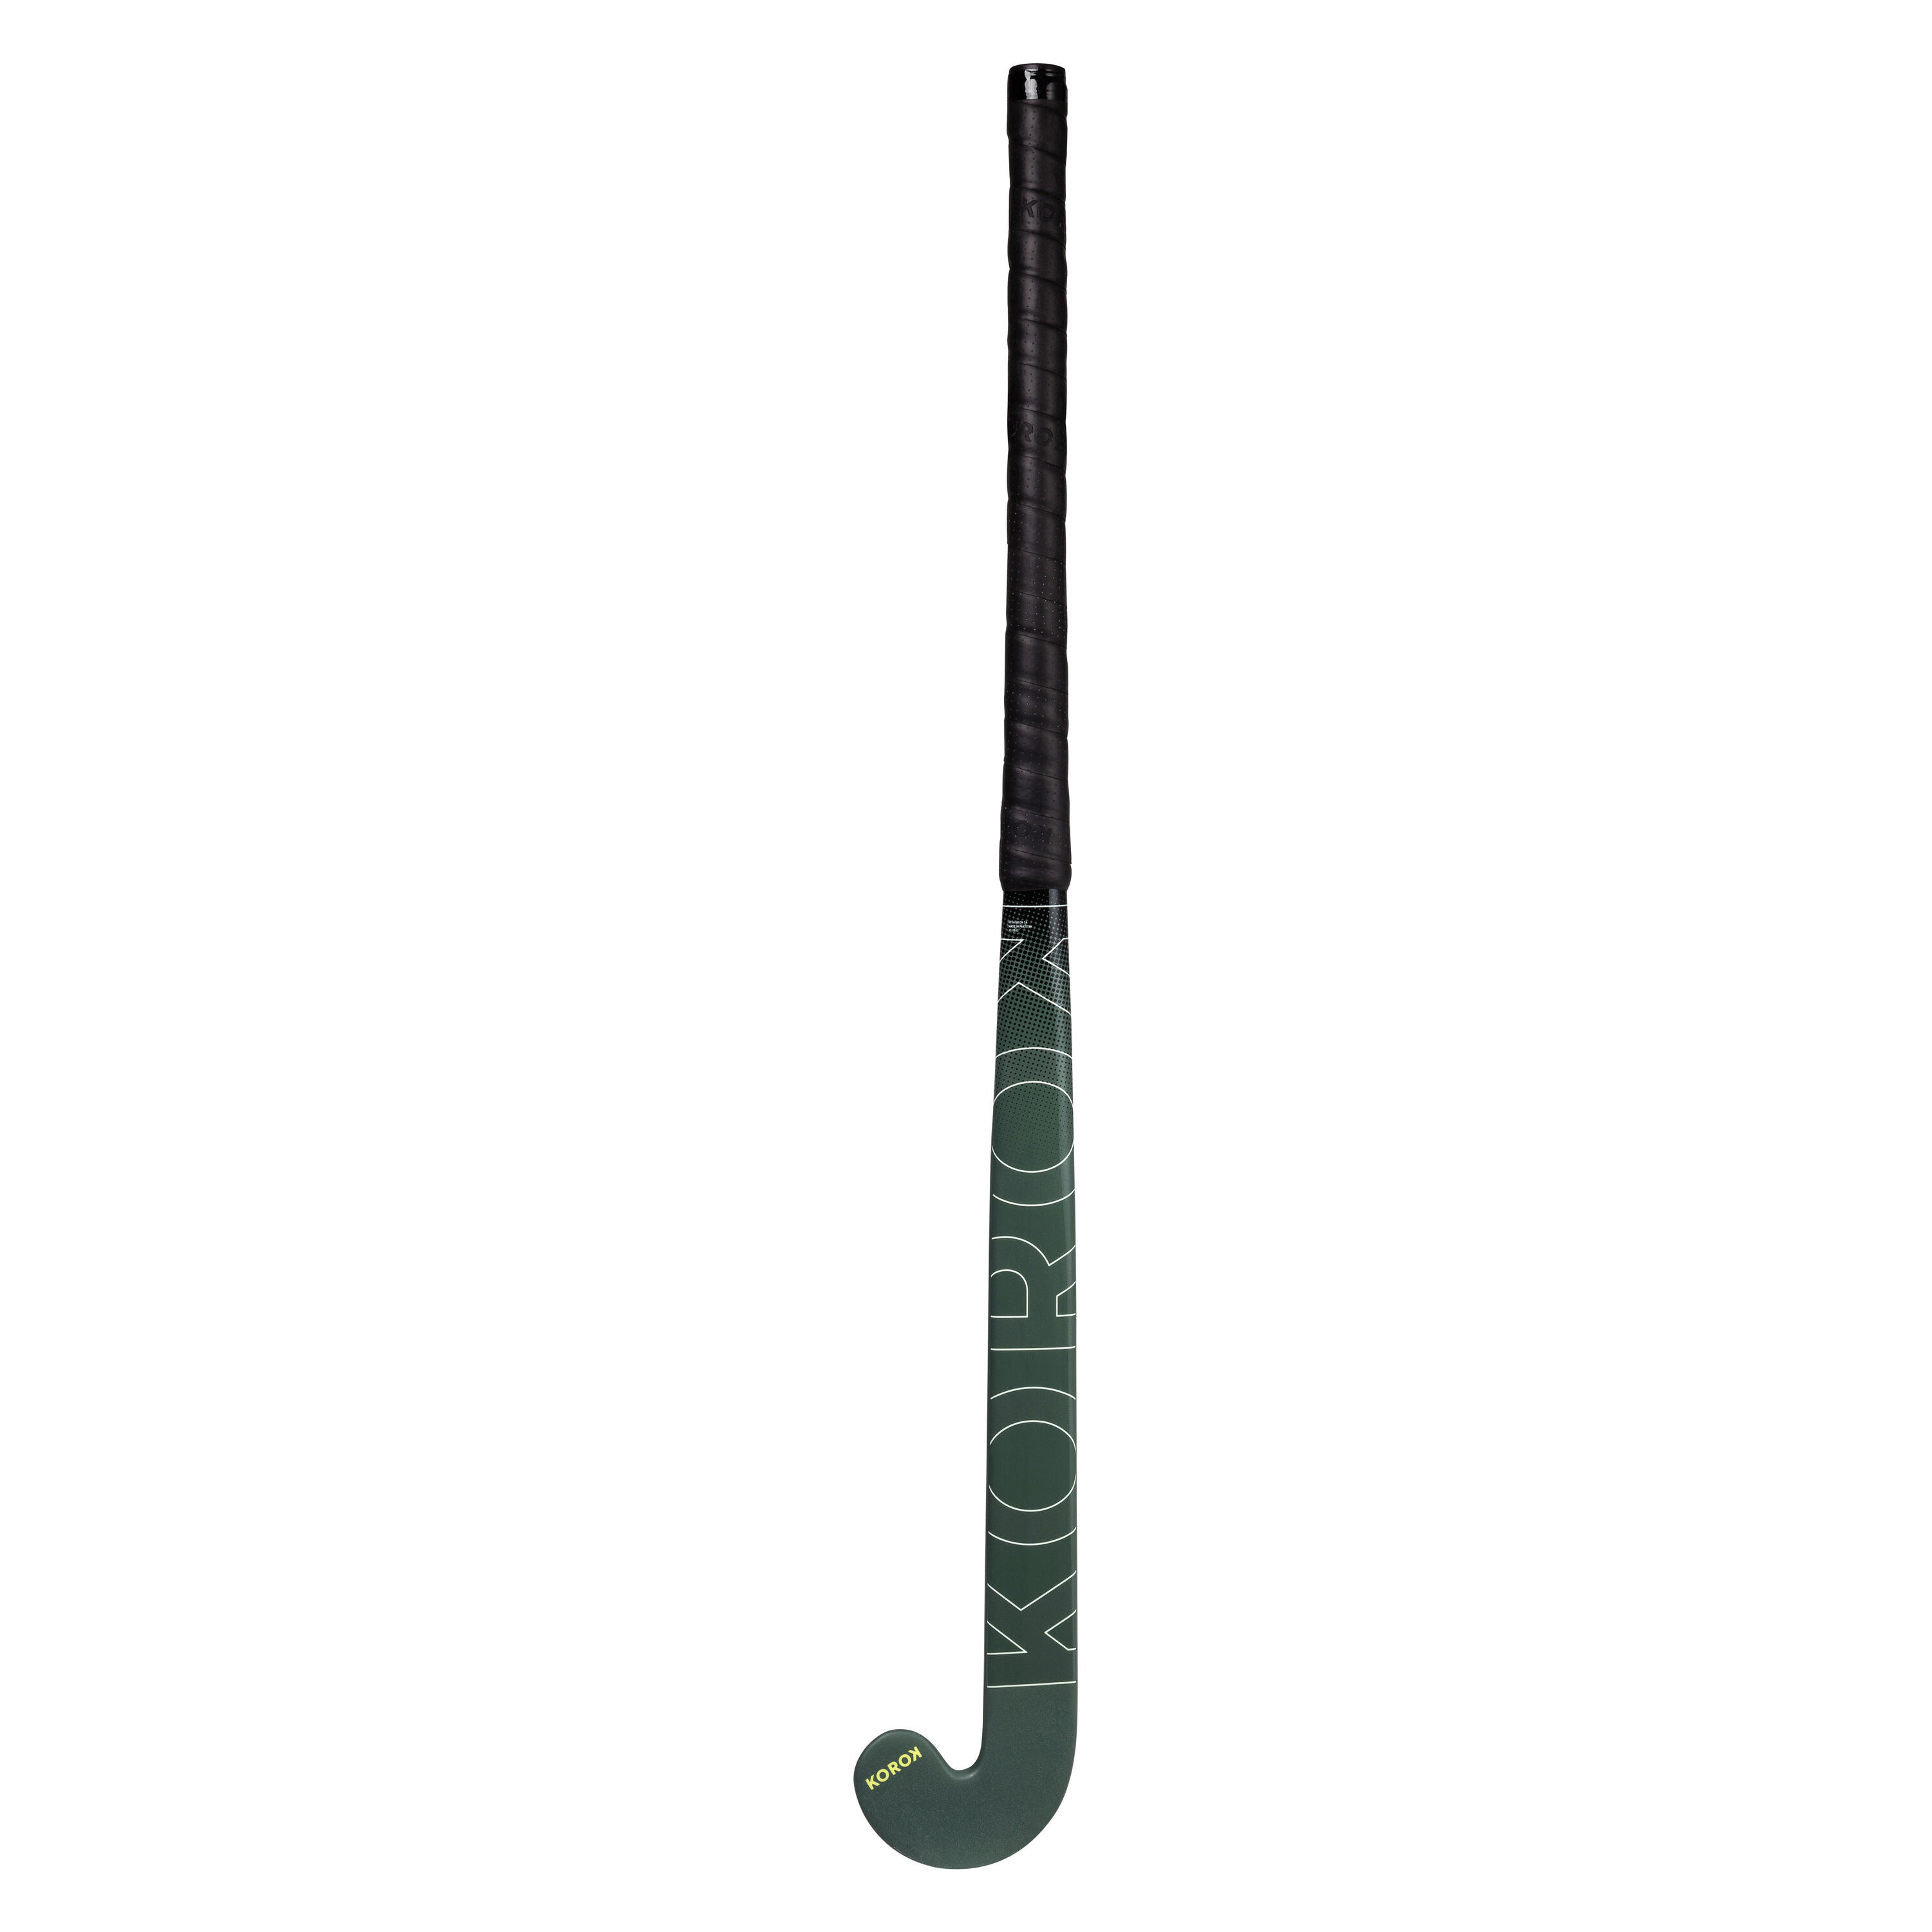 Adult Intermediate 30% Carbon Mid Bow Field Hockey Stick FH530 - Khaki/Black 5/12